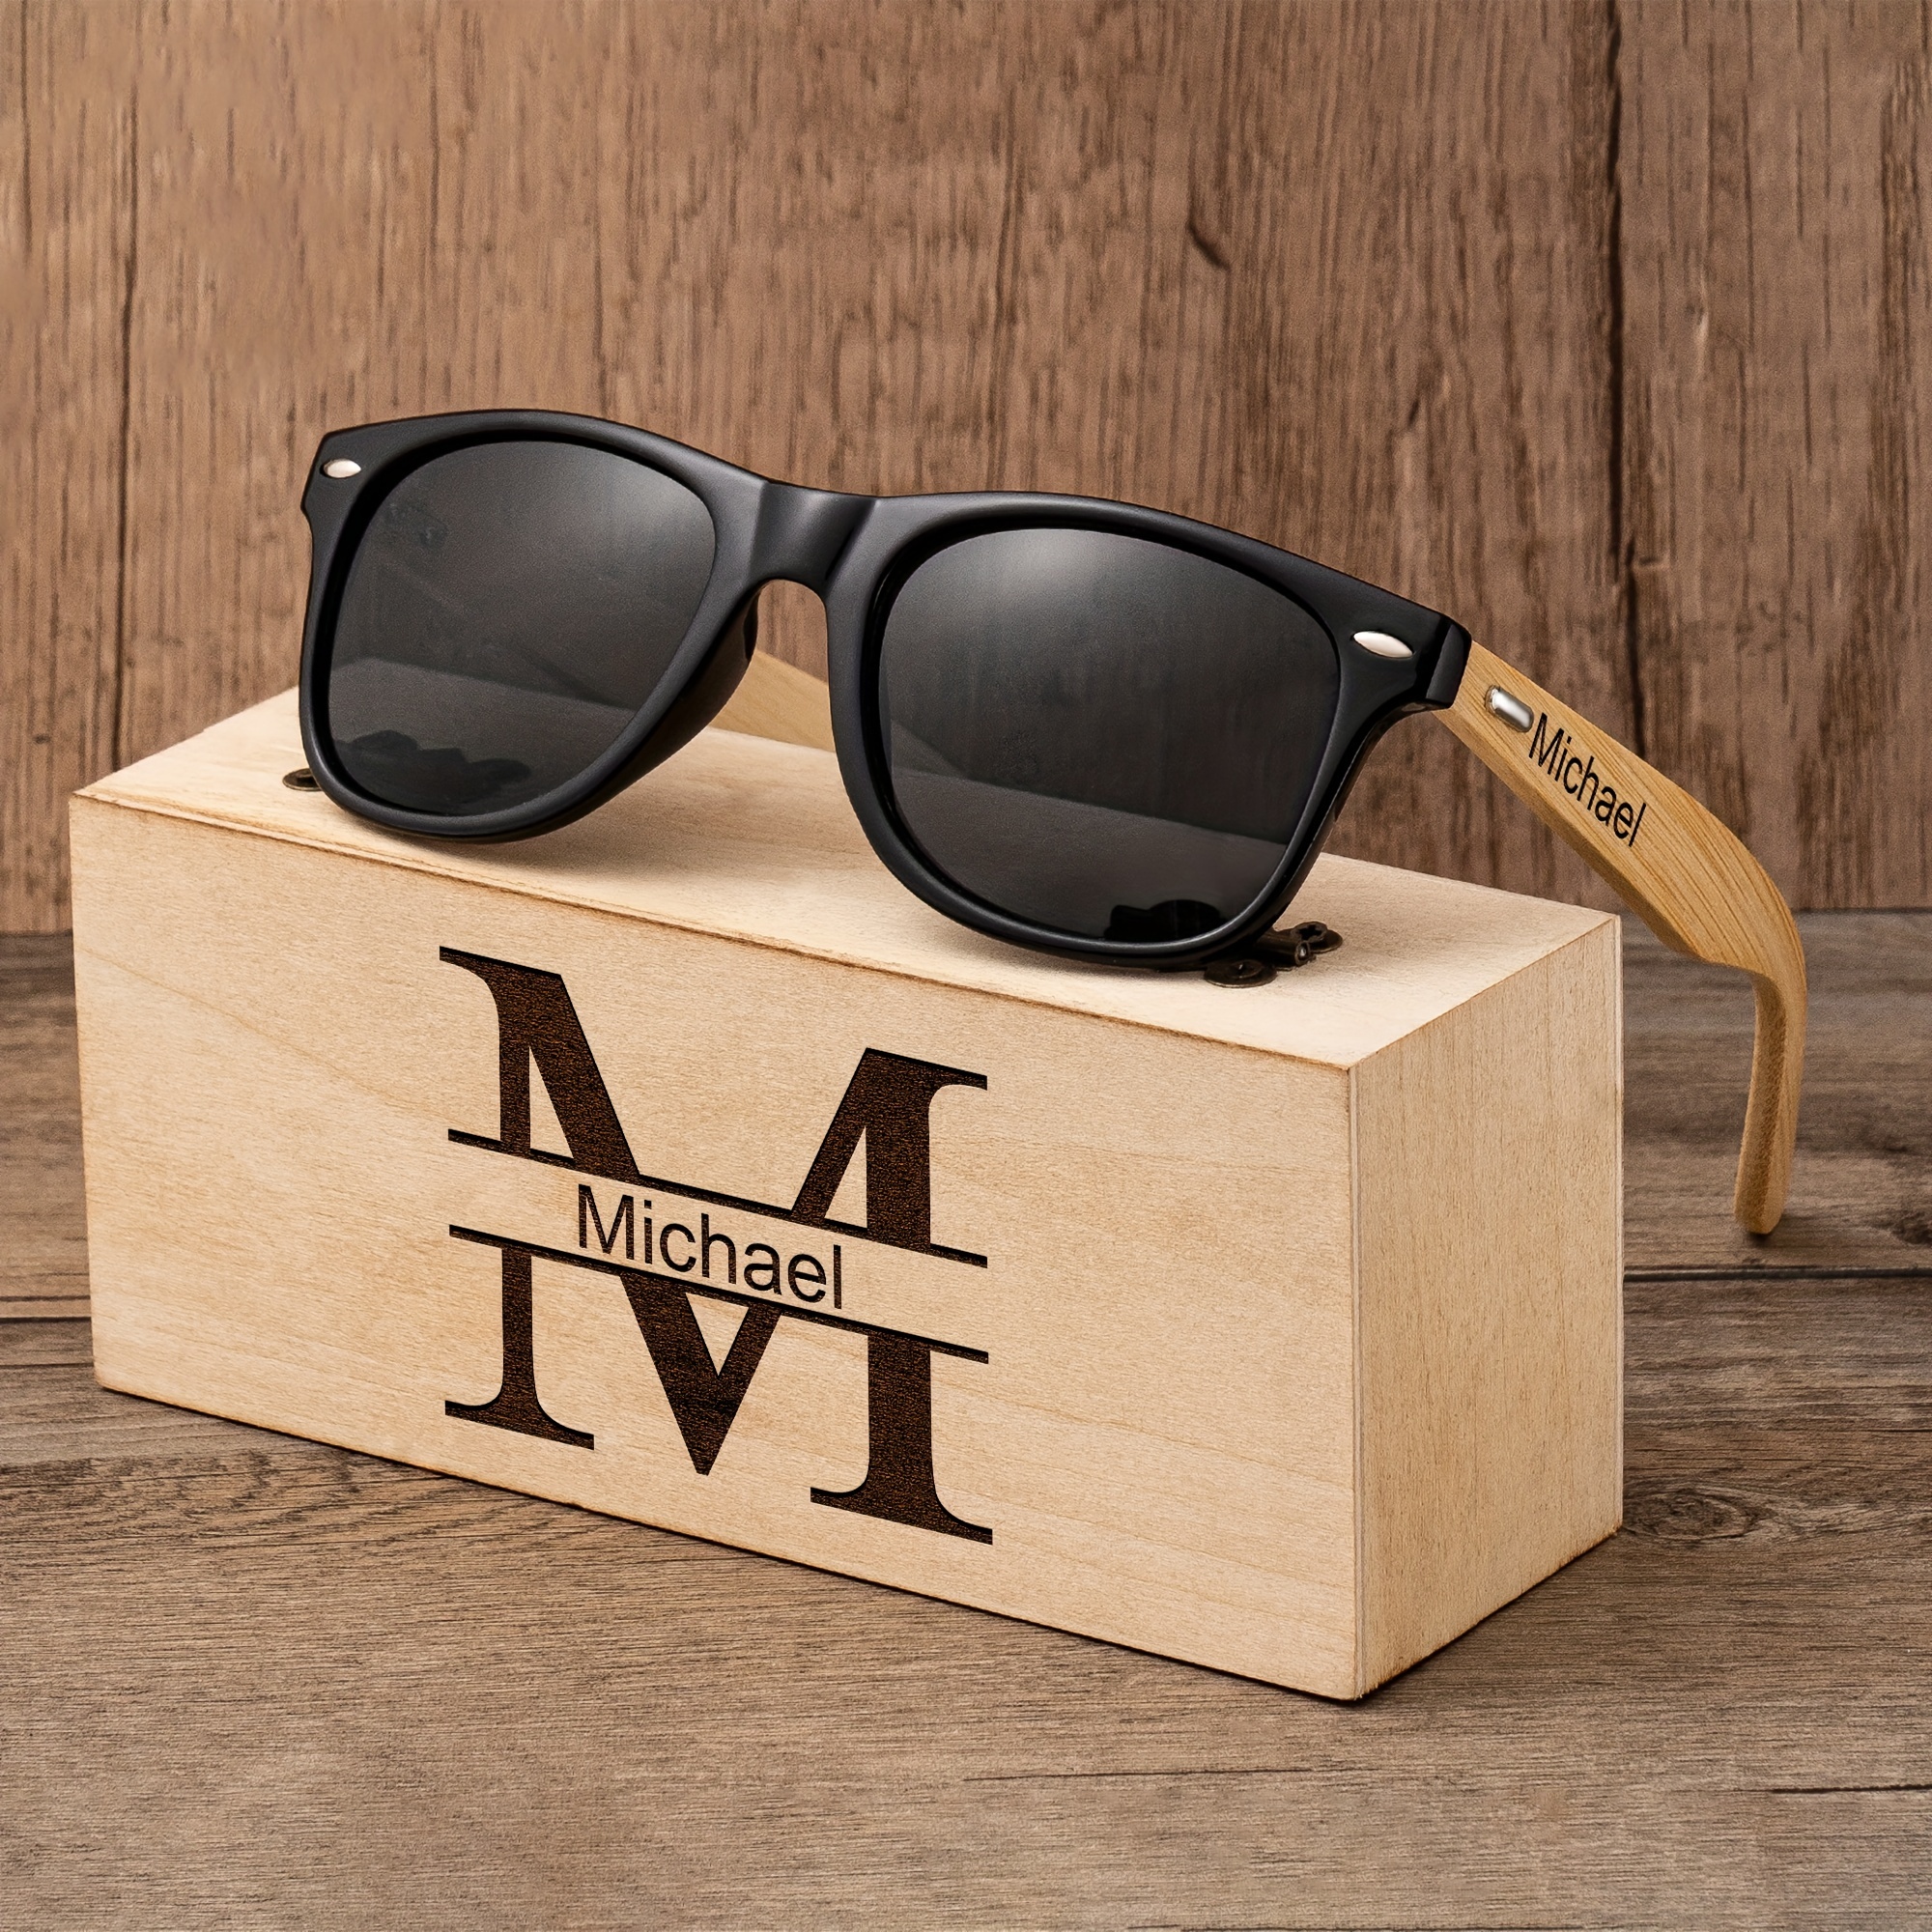 Natural Bamboo Sunglasses Prescription Glasses Groomsmen Proposal